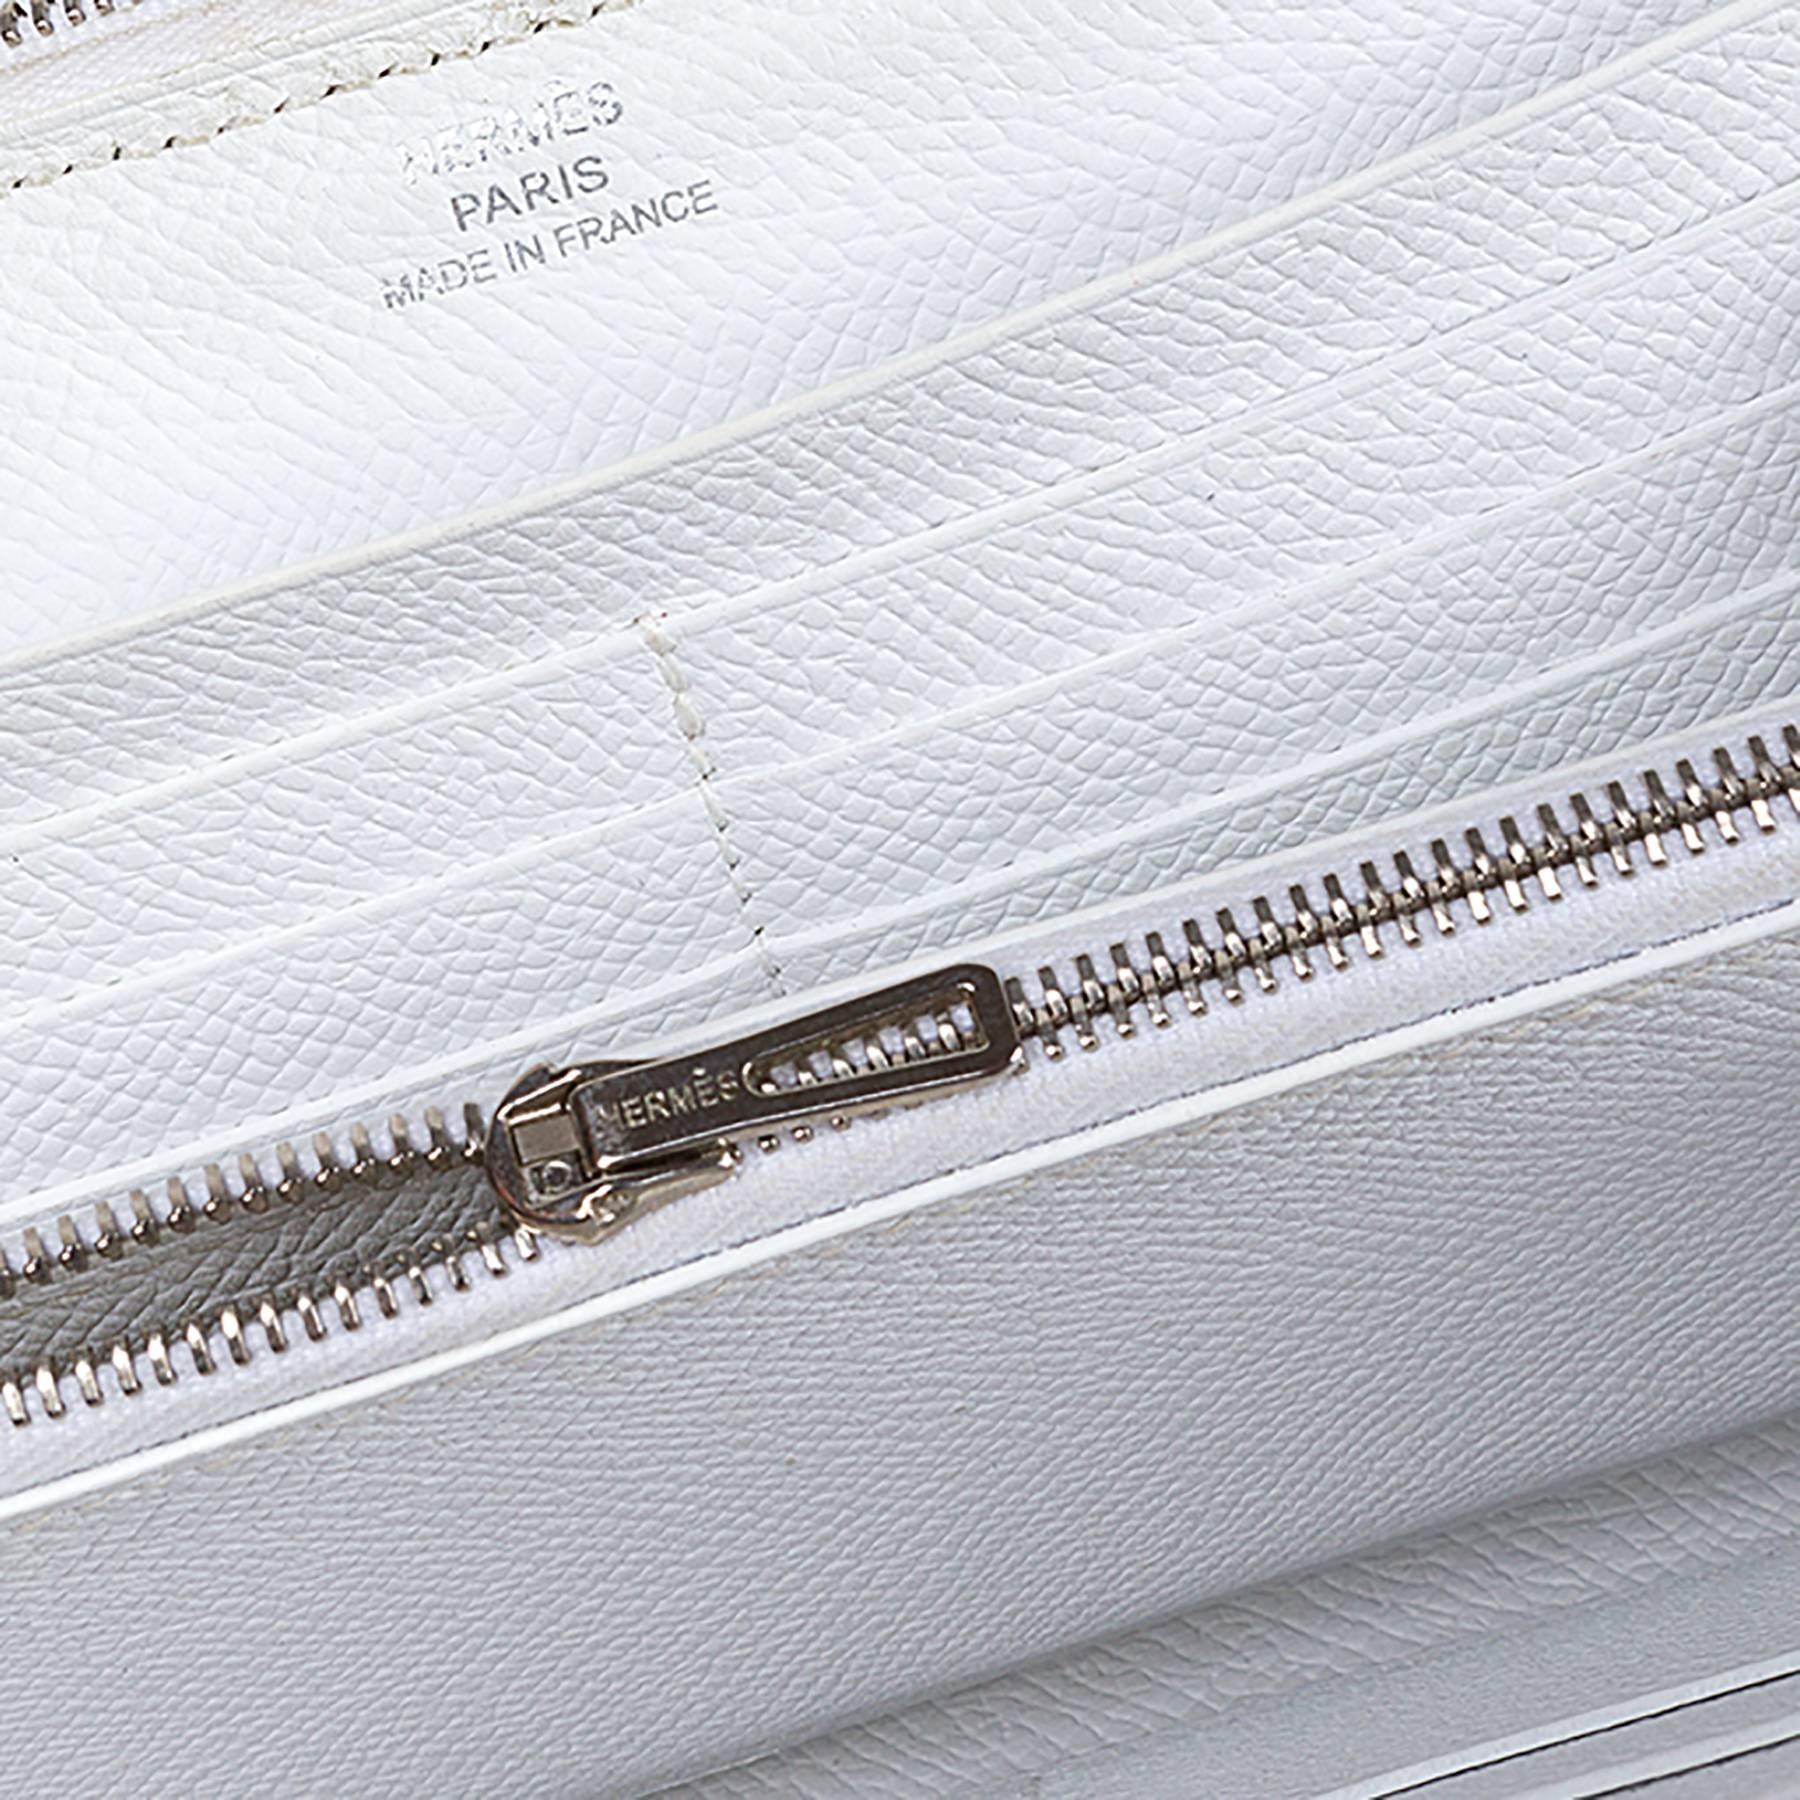 Wallet Hermès, Azap model.
Material: Epsom Calf
Colour: White
Year 2007.
